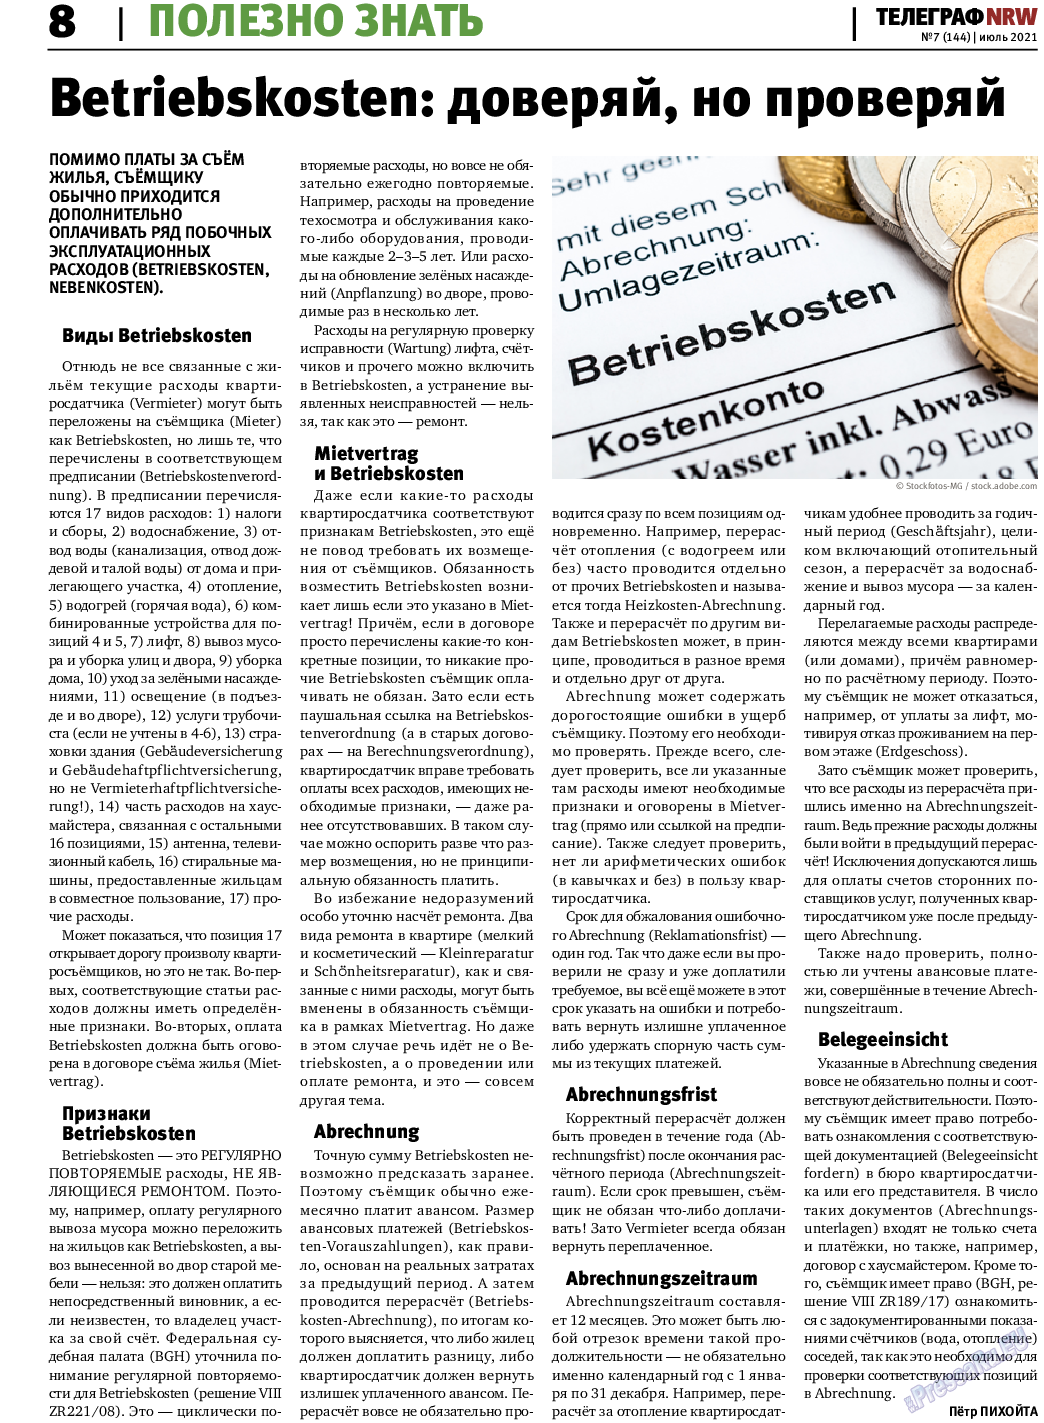 Телеграф NRW, газета. 2021 №7 стр.8